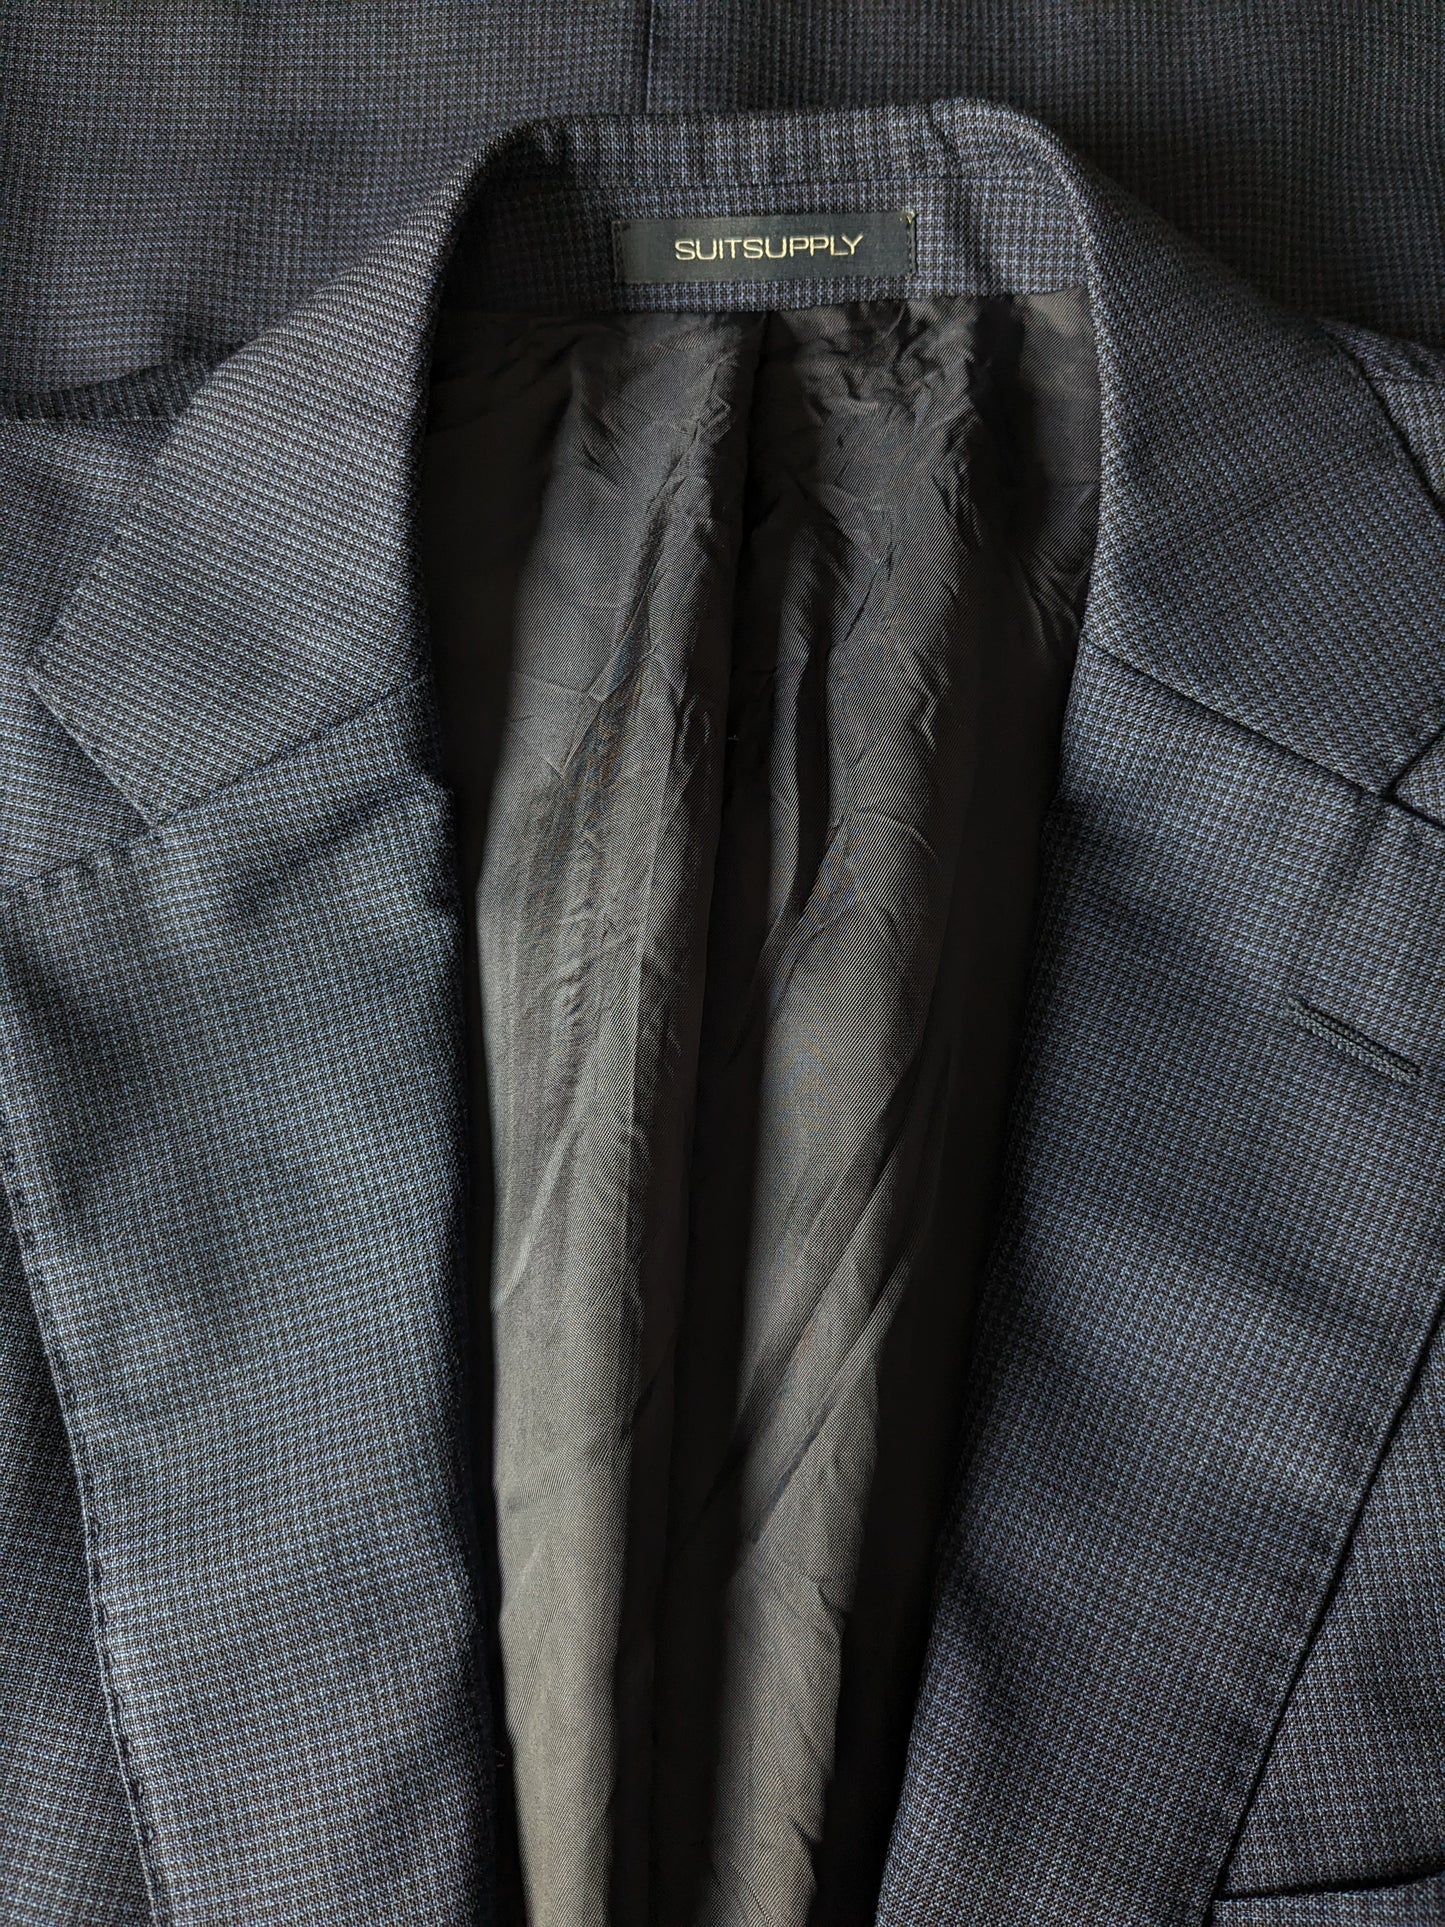 Jaqueta de lana de trajes de trajes. Motivo negro negro. Tamaño 48 / M.